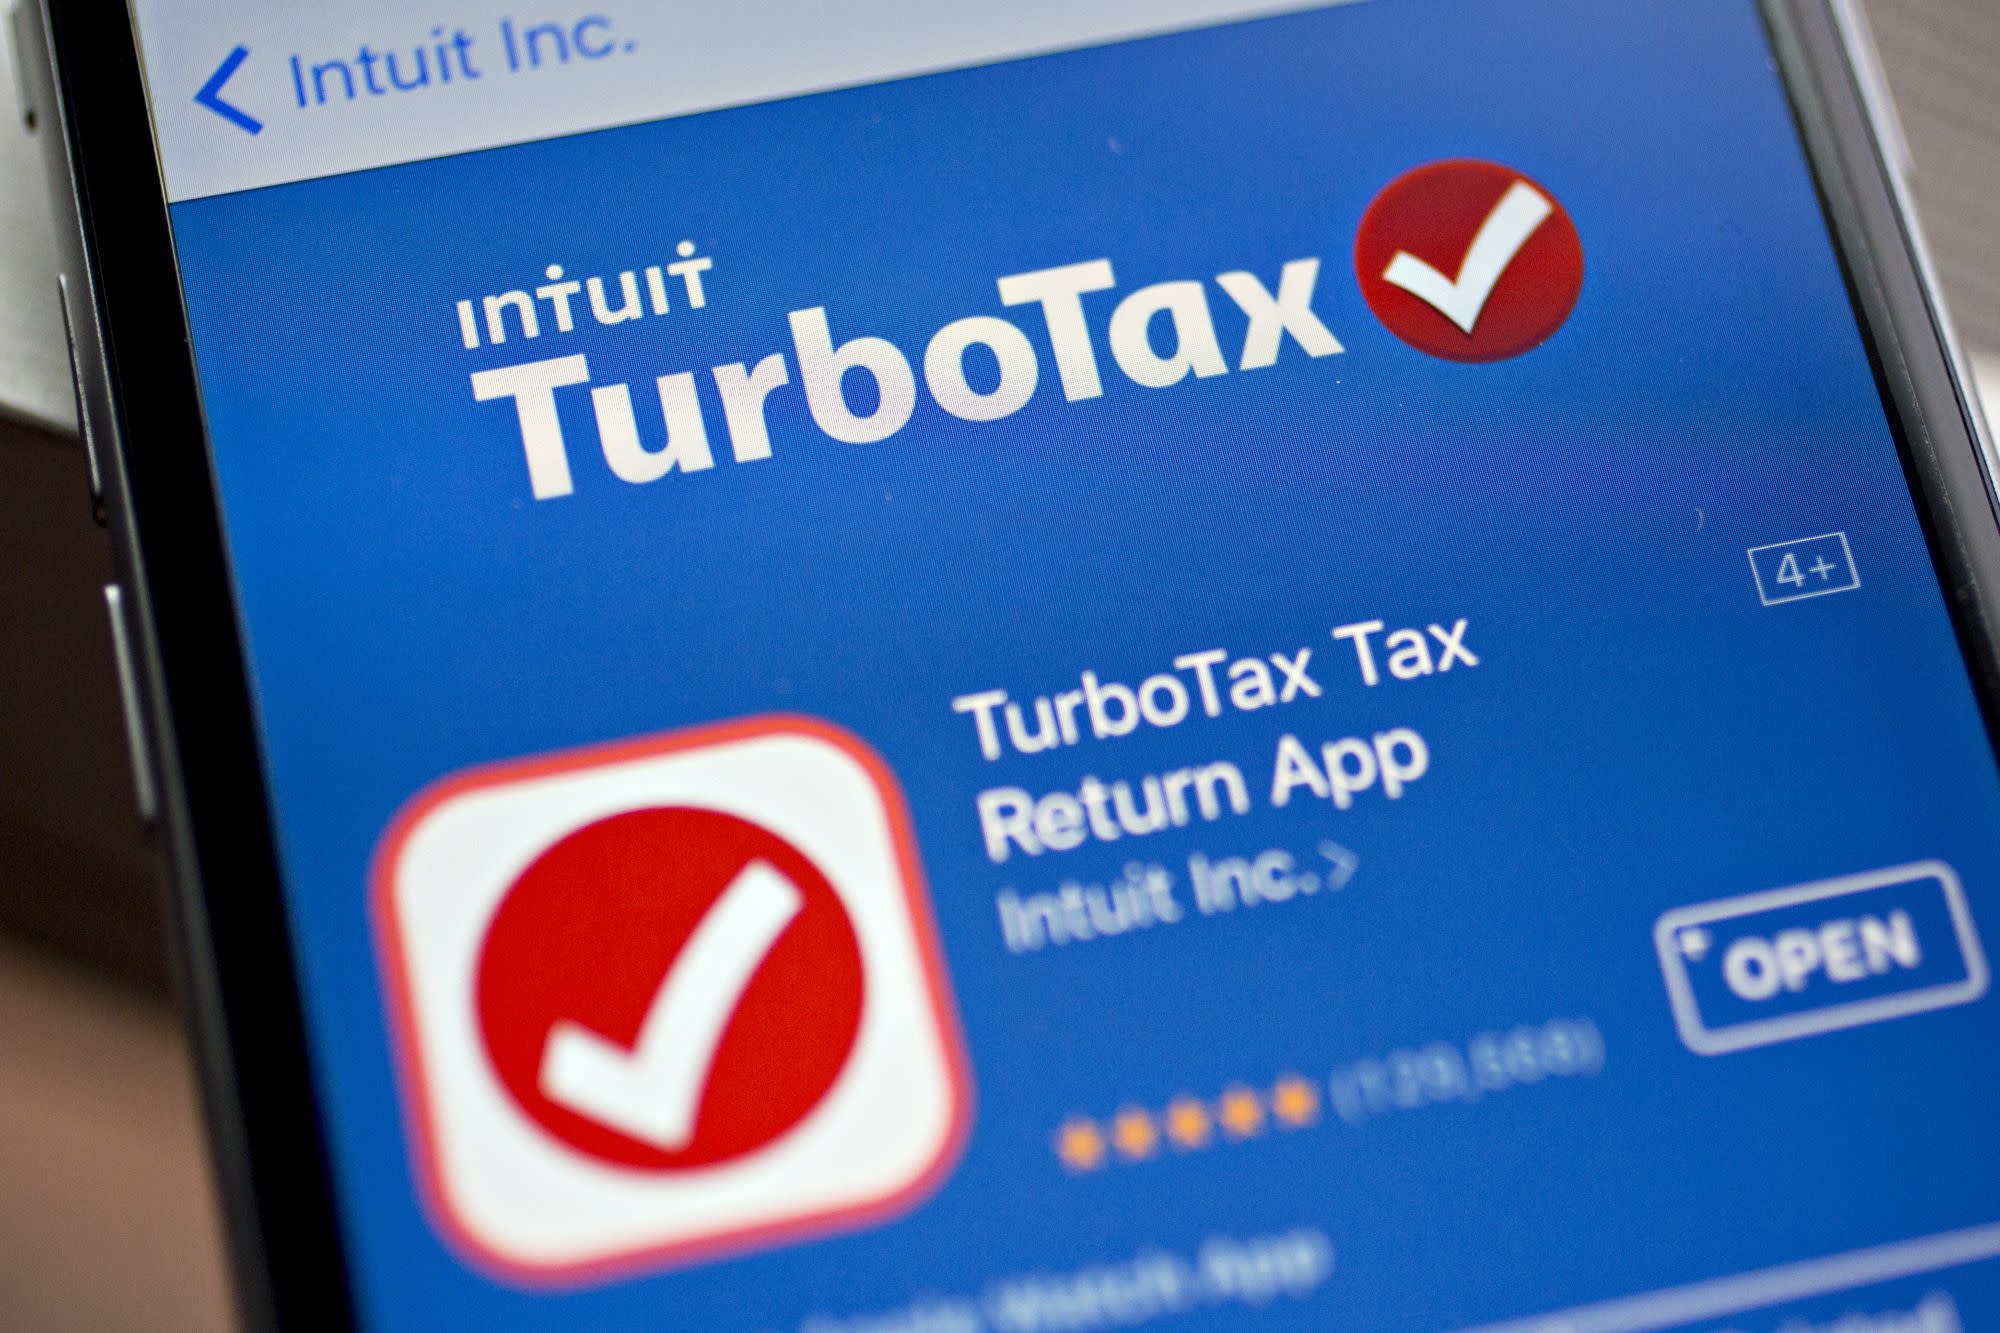 turbotax-owner-s-acquisition-of-credit-karma-could-spark-antitrust-concerns